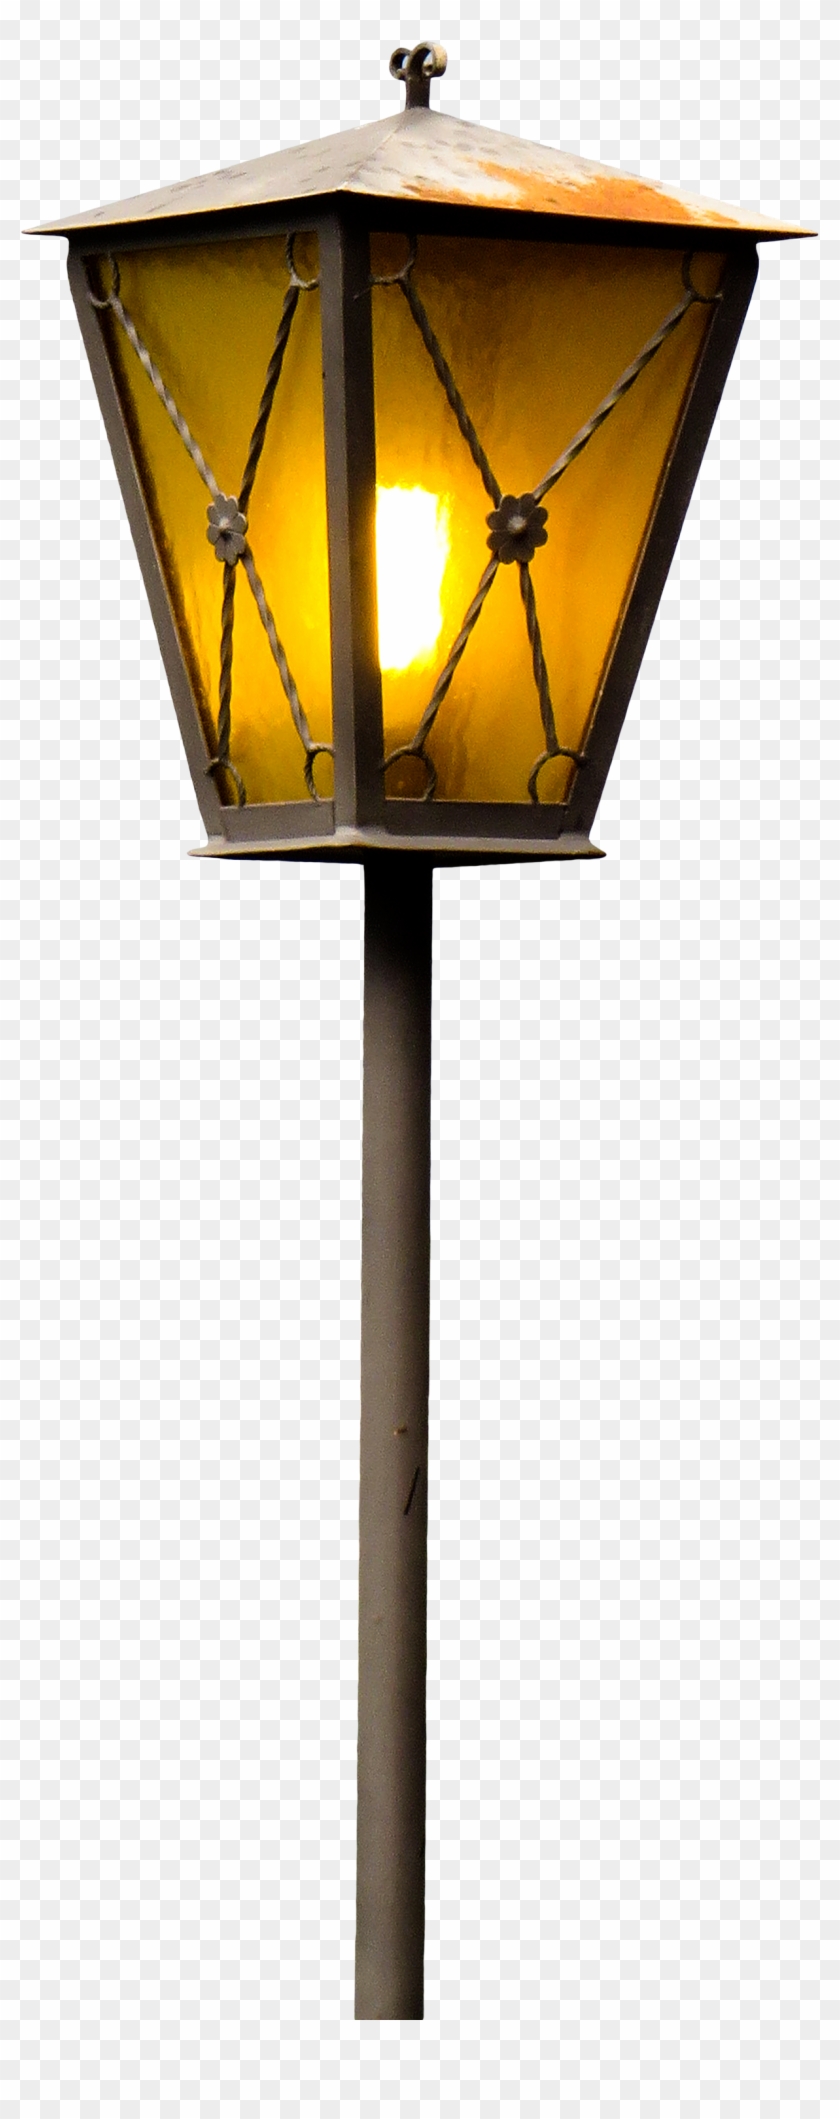 Street Light Png Image - Street Lamp Transparent Background #151015